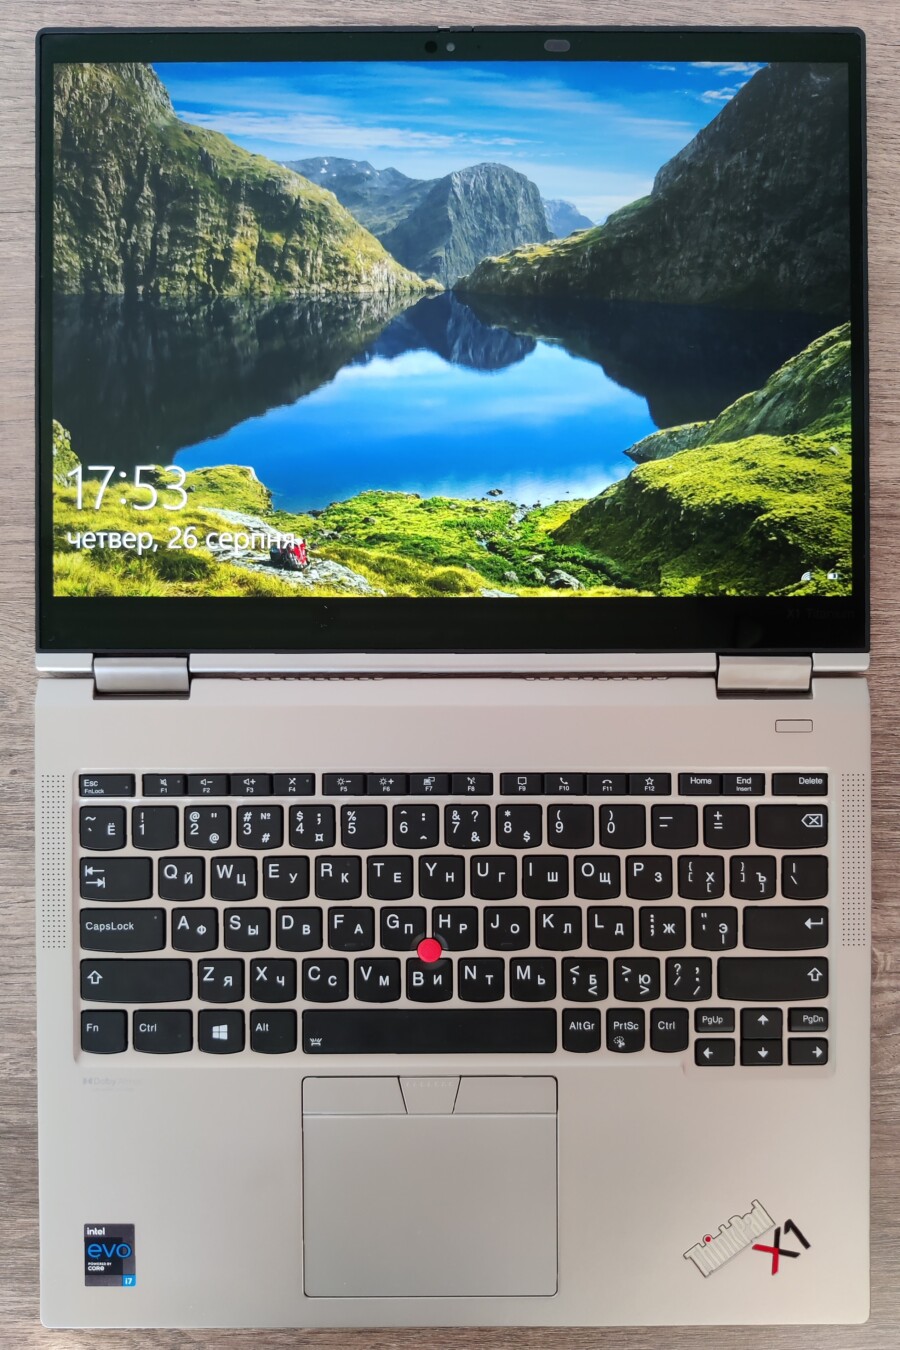 Огляд Lenovo ThinkPad X1 Titanium YOGA (фото itsider.com.ua)